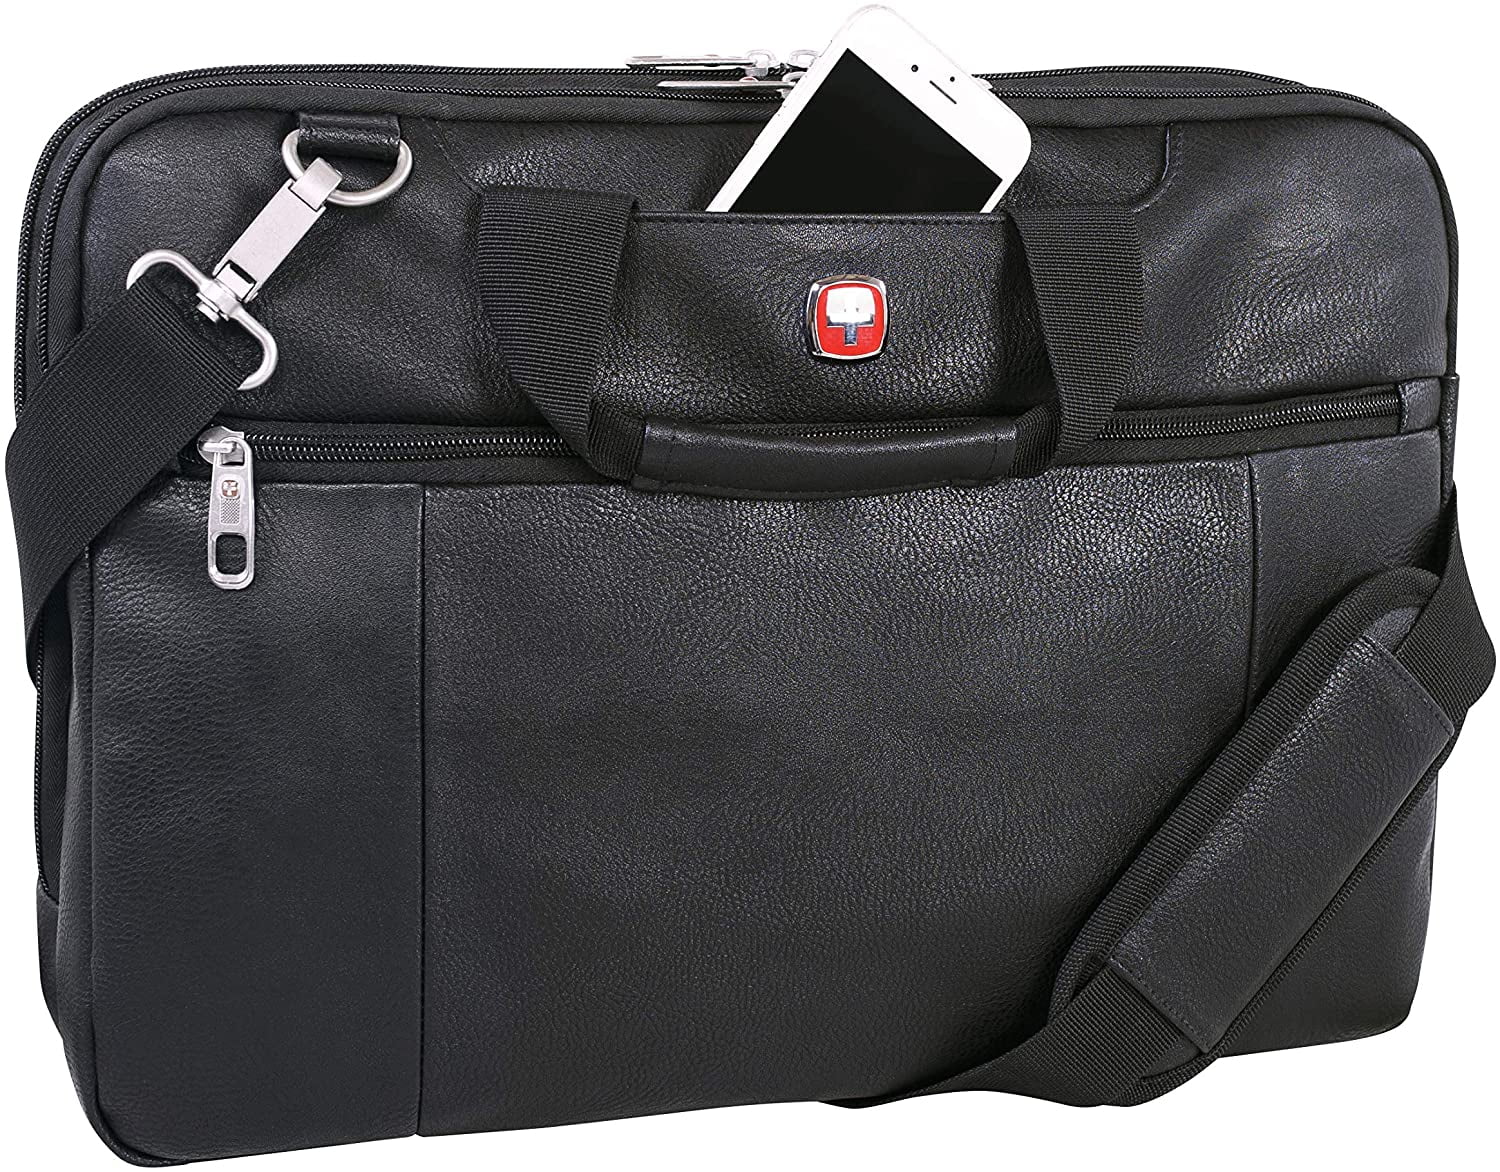 Fits Most 15 Inch Laptops amd Tablets Swiss Gear SA8733 Black TSA Friendly ScanSmart Laptop Messenger Bag 